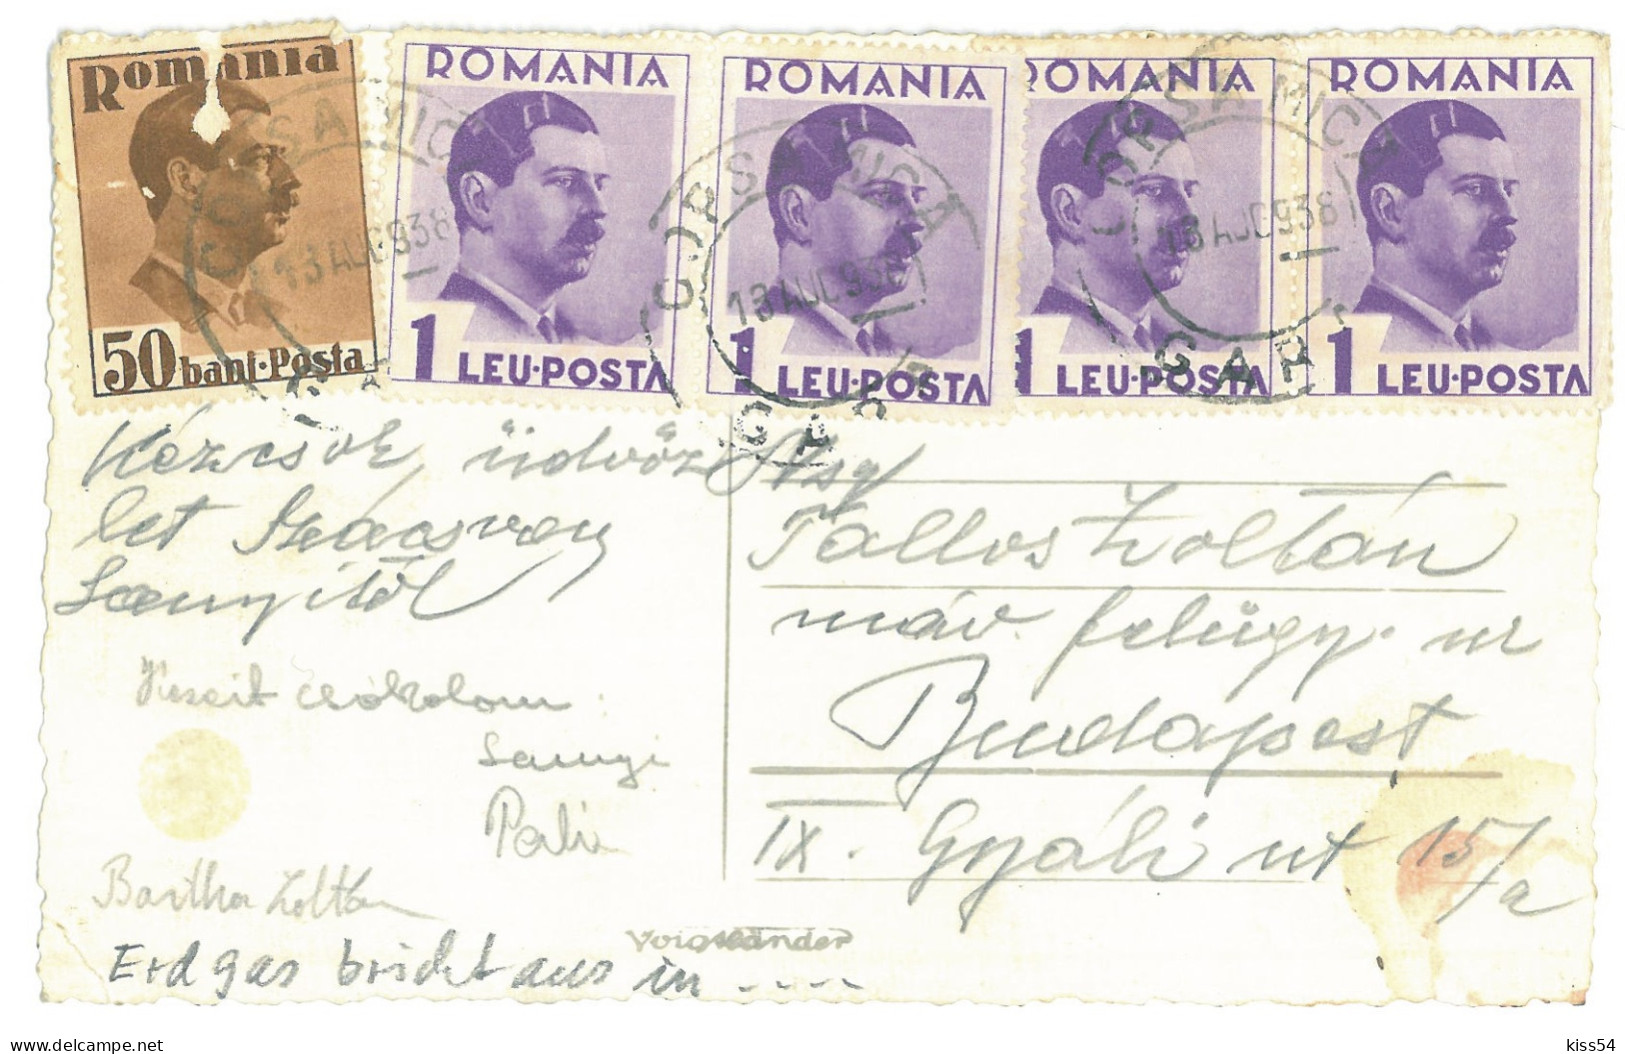 RO 81 - 25032 COPSA-MICA, Sibiu, Arderea Gazului Metan, Romania - Old Postcard, Real Photo - Used - 1938 - Rumania